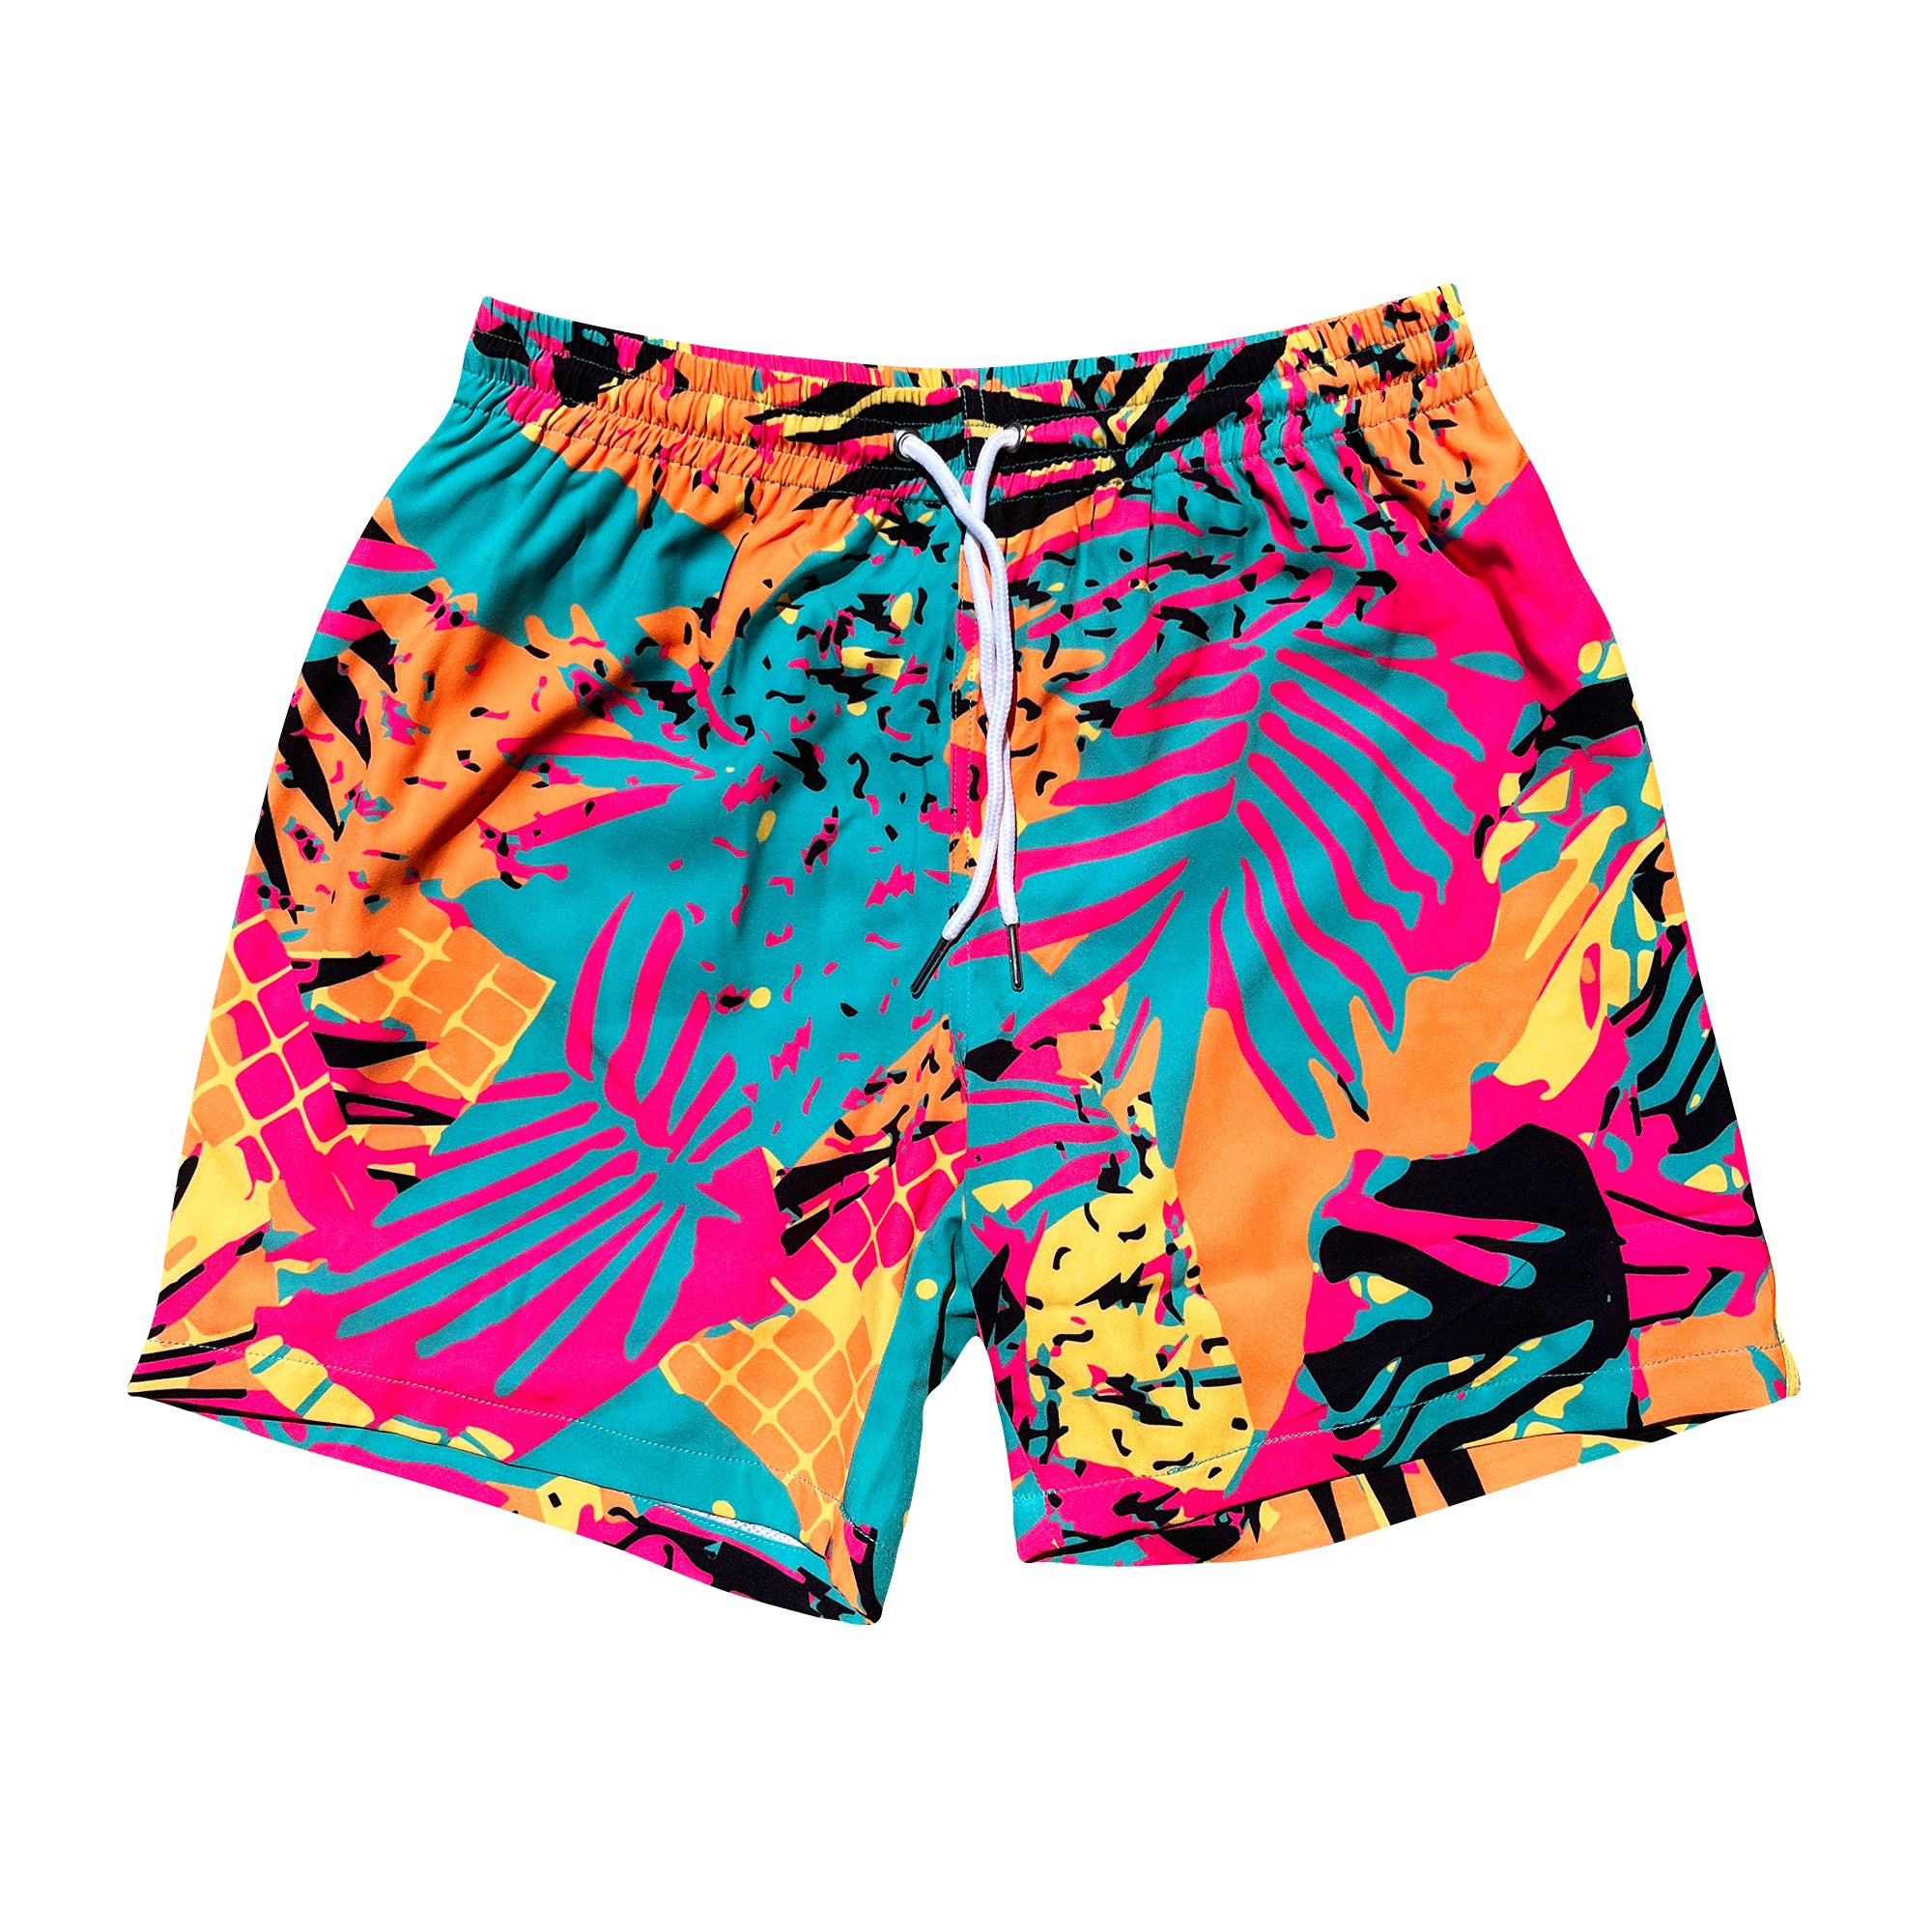 Summer Jam 80s Retro Swim Trunks Shorts - Fresh Prince inspired vintage retro shorts swimwear tropical beach red green orange yellow throwback old school design. B Fresh Gear.